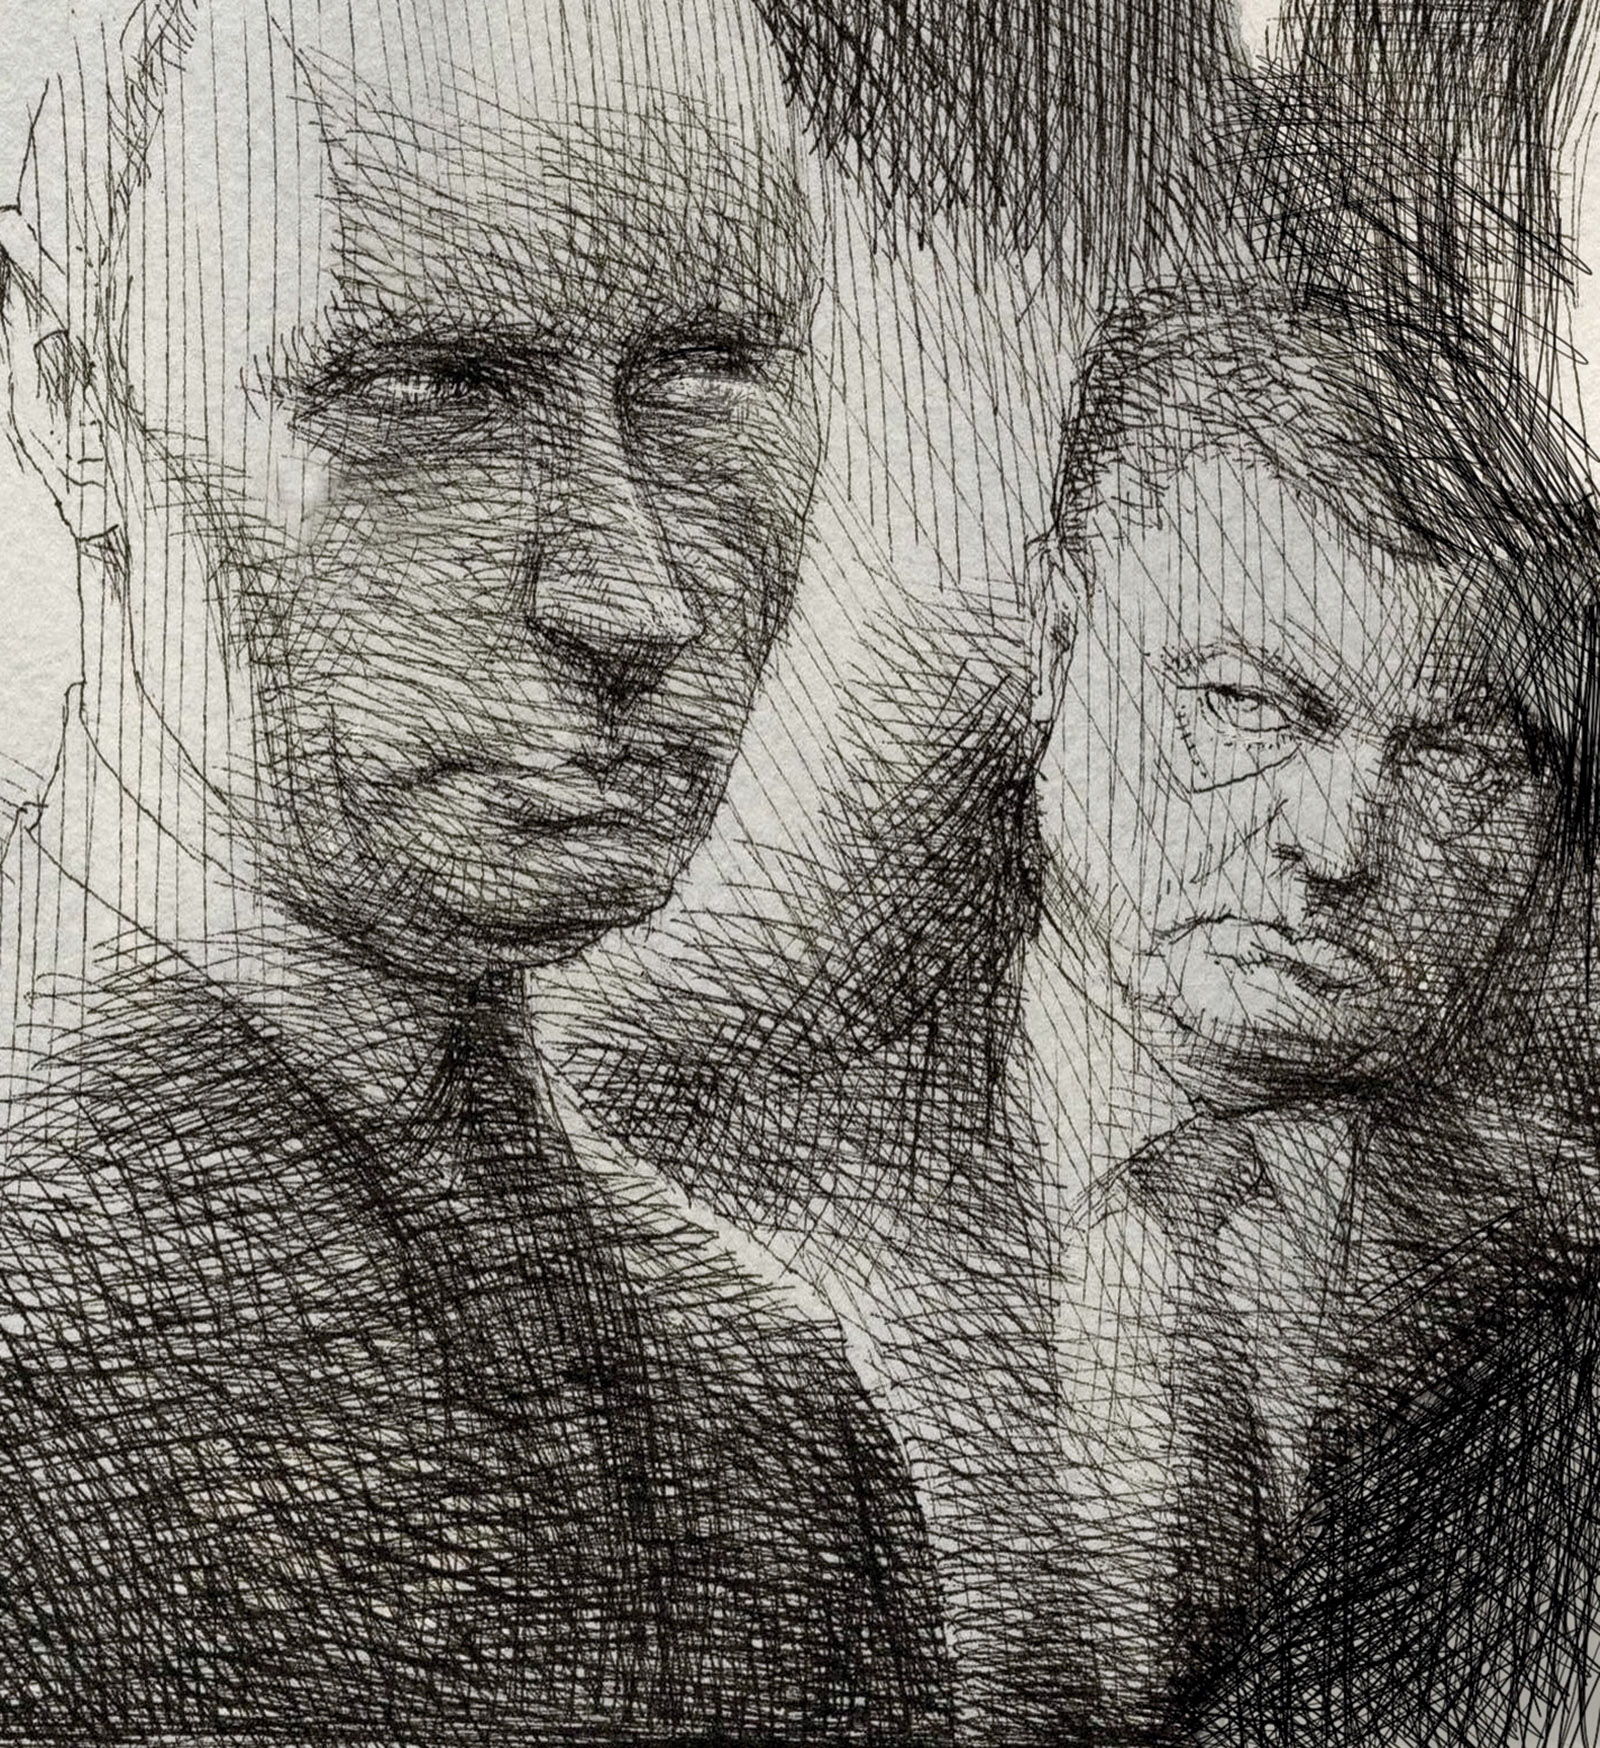 Vladimir Putin and Petro Poroshenko